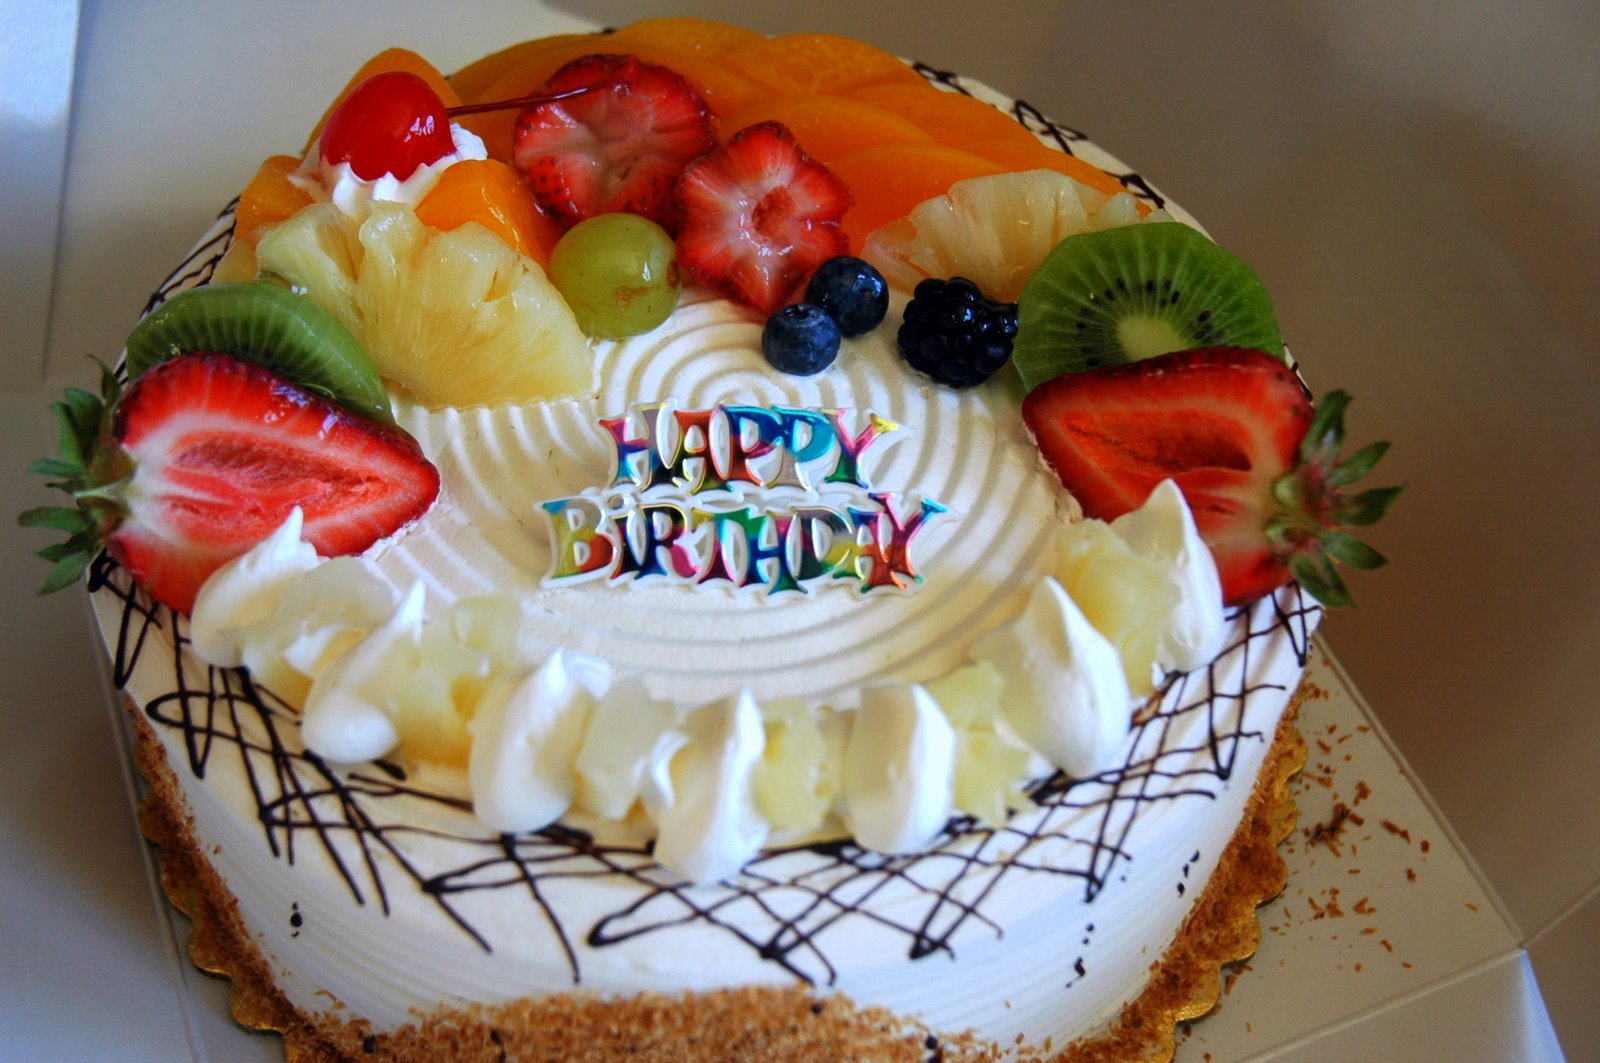 Happy Birthday With Fruit Cake